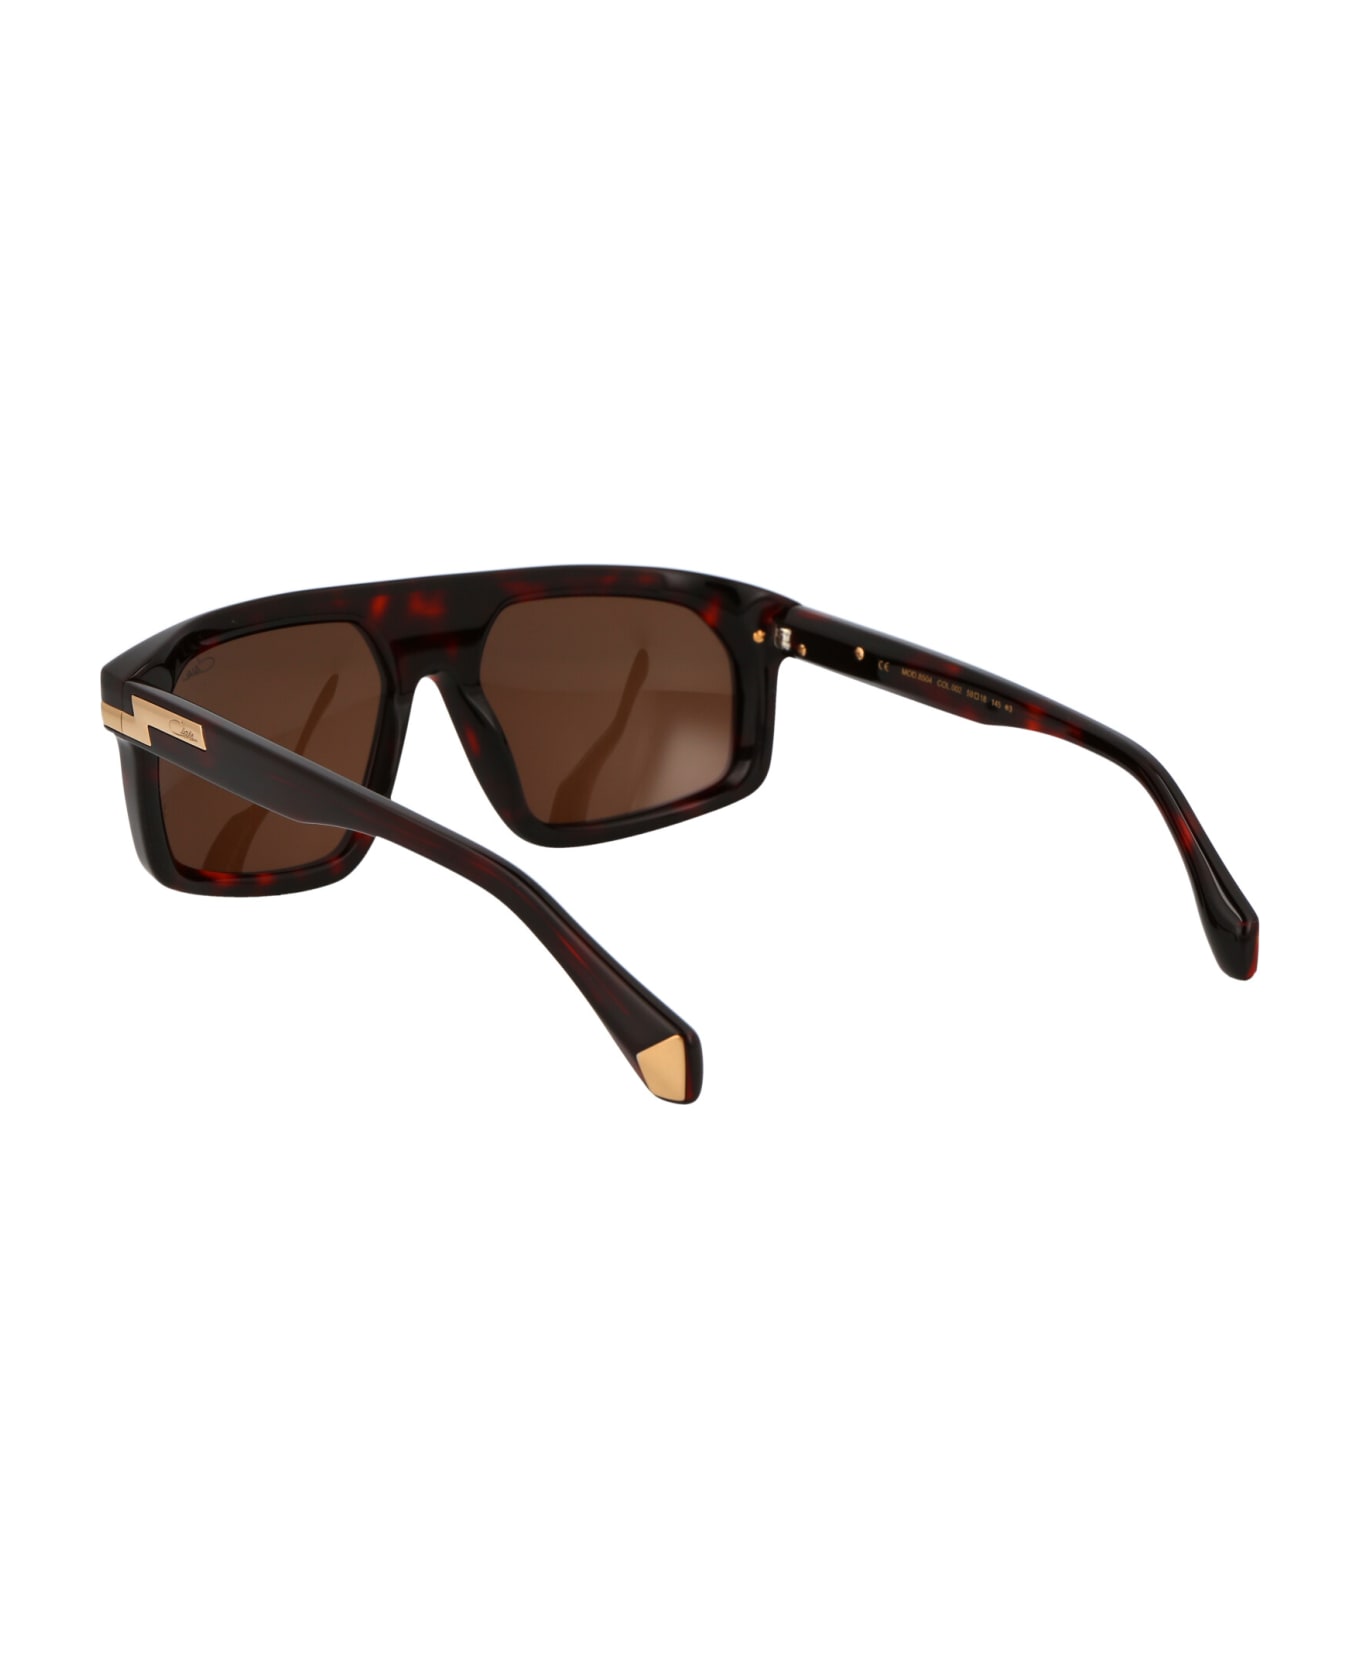 Cazal Mod. 8504 Sunglasses - 002 HAVANA